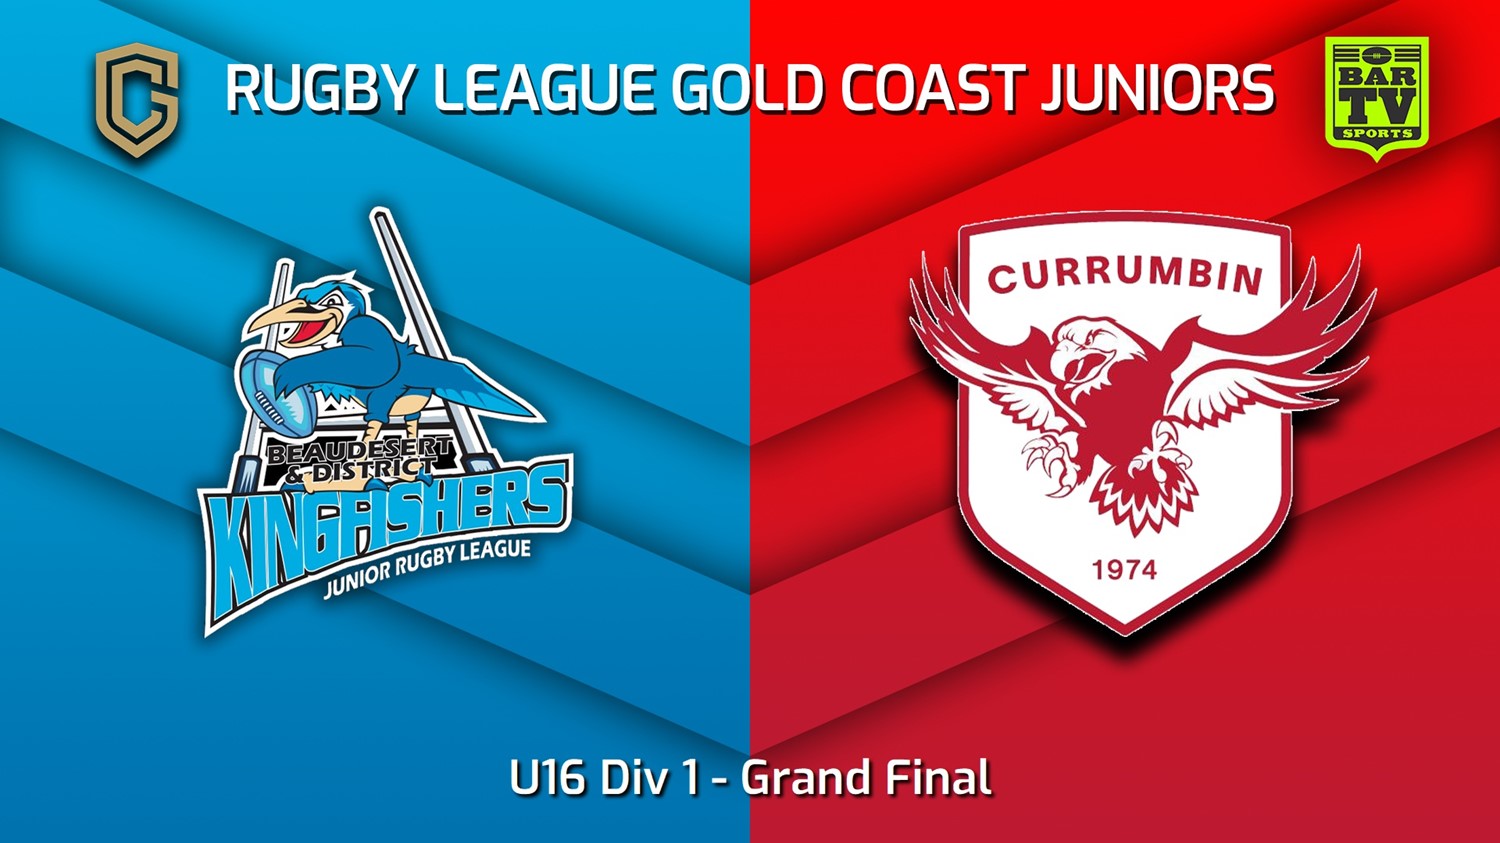 230909-Rugby League Gold Coast Juniors Grand Final - U16 Div 1 - Beaudesert Kingfishers v Currumbin Eagles Slate Image